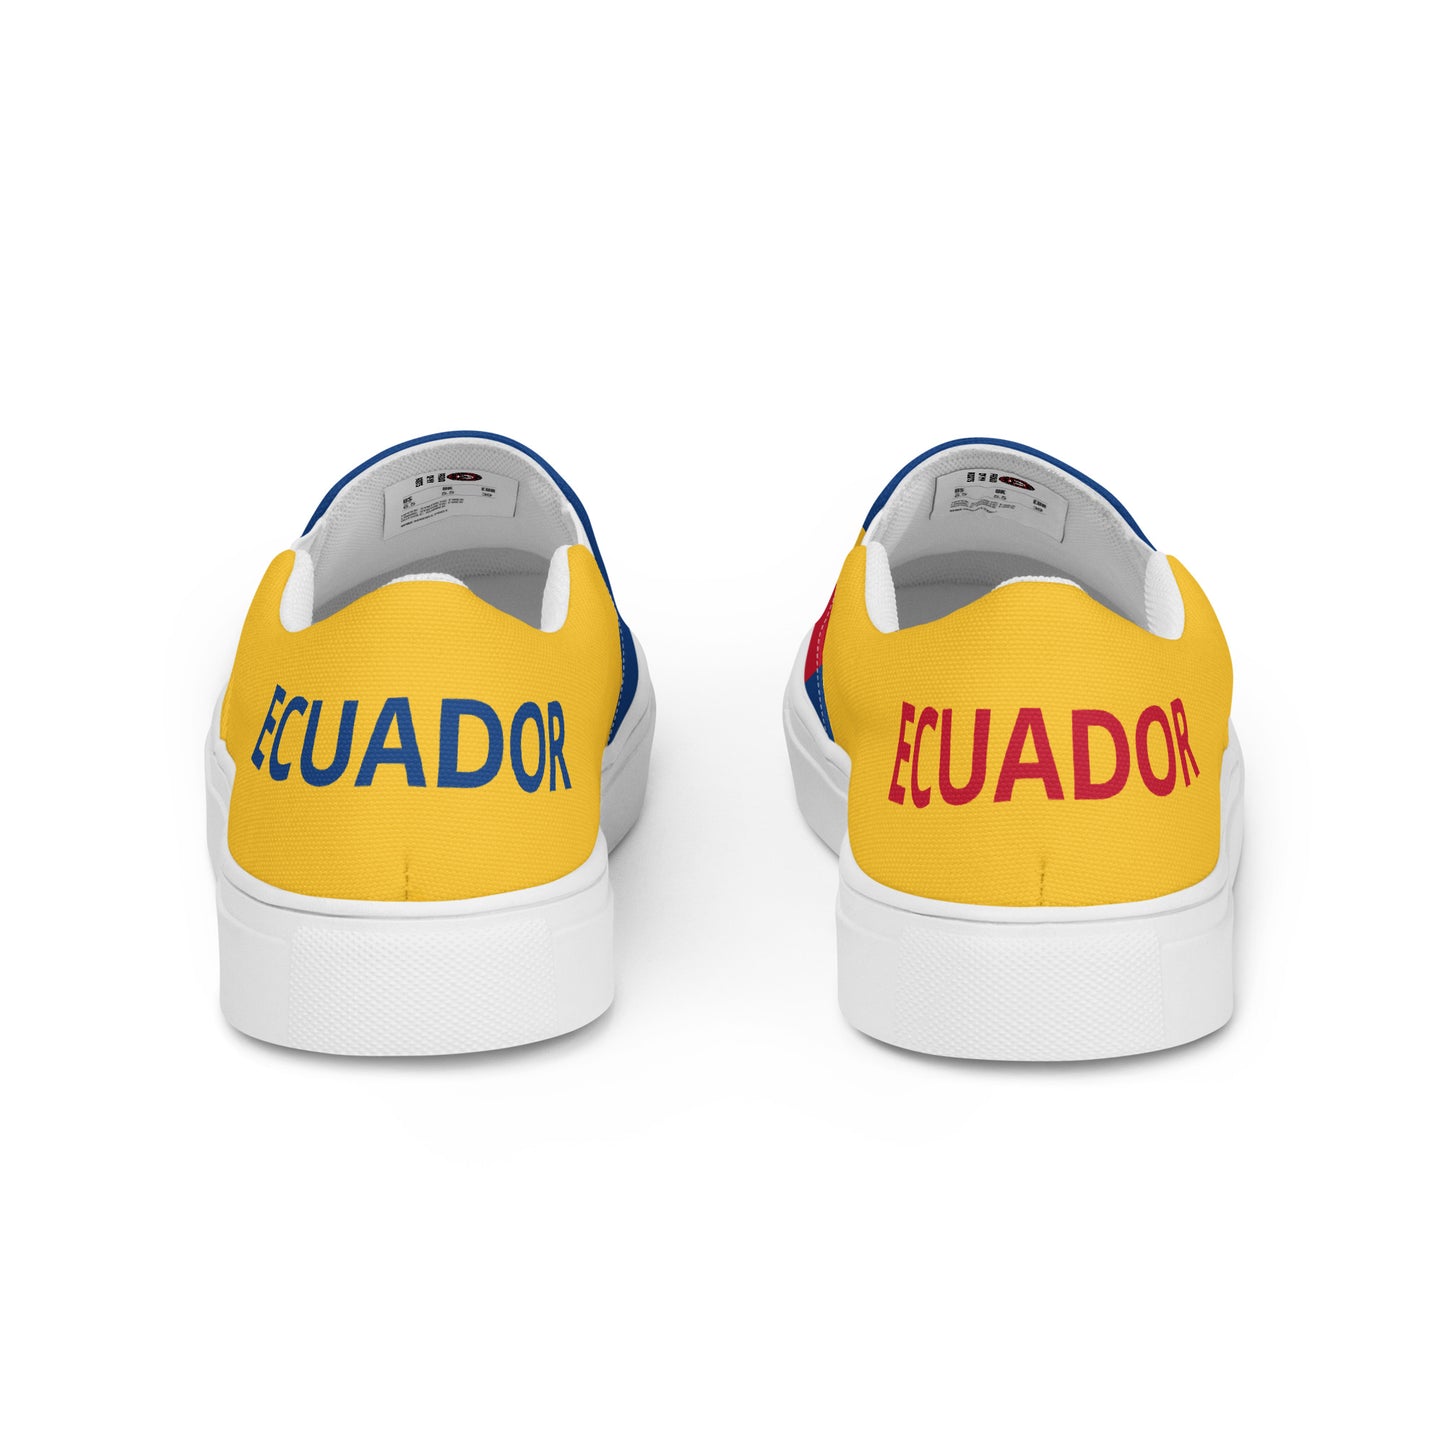 Ecuador - Men - Bandera - Slip-on shoes